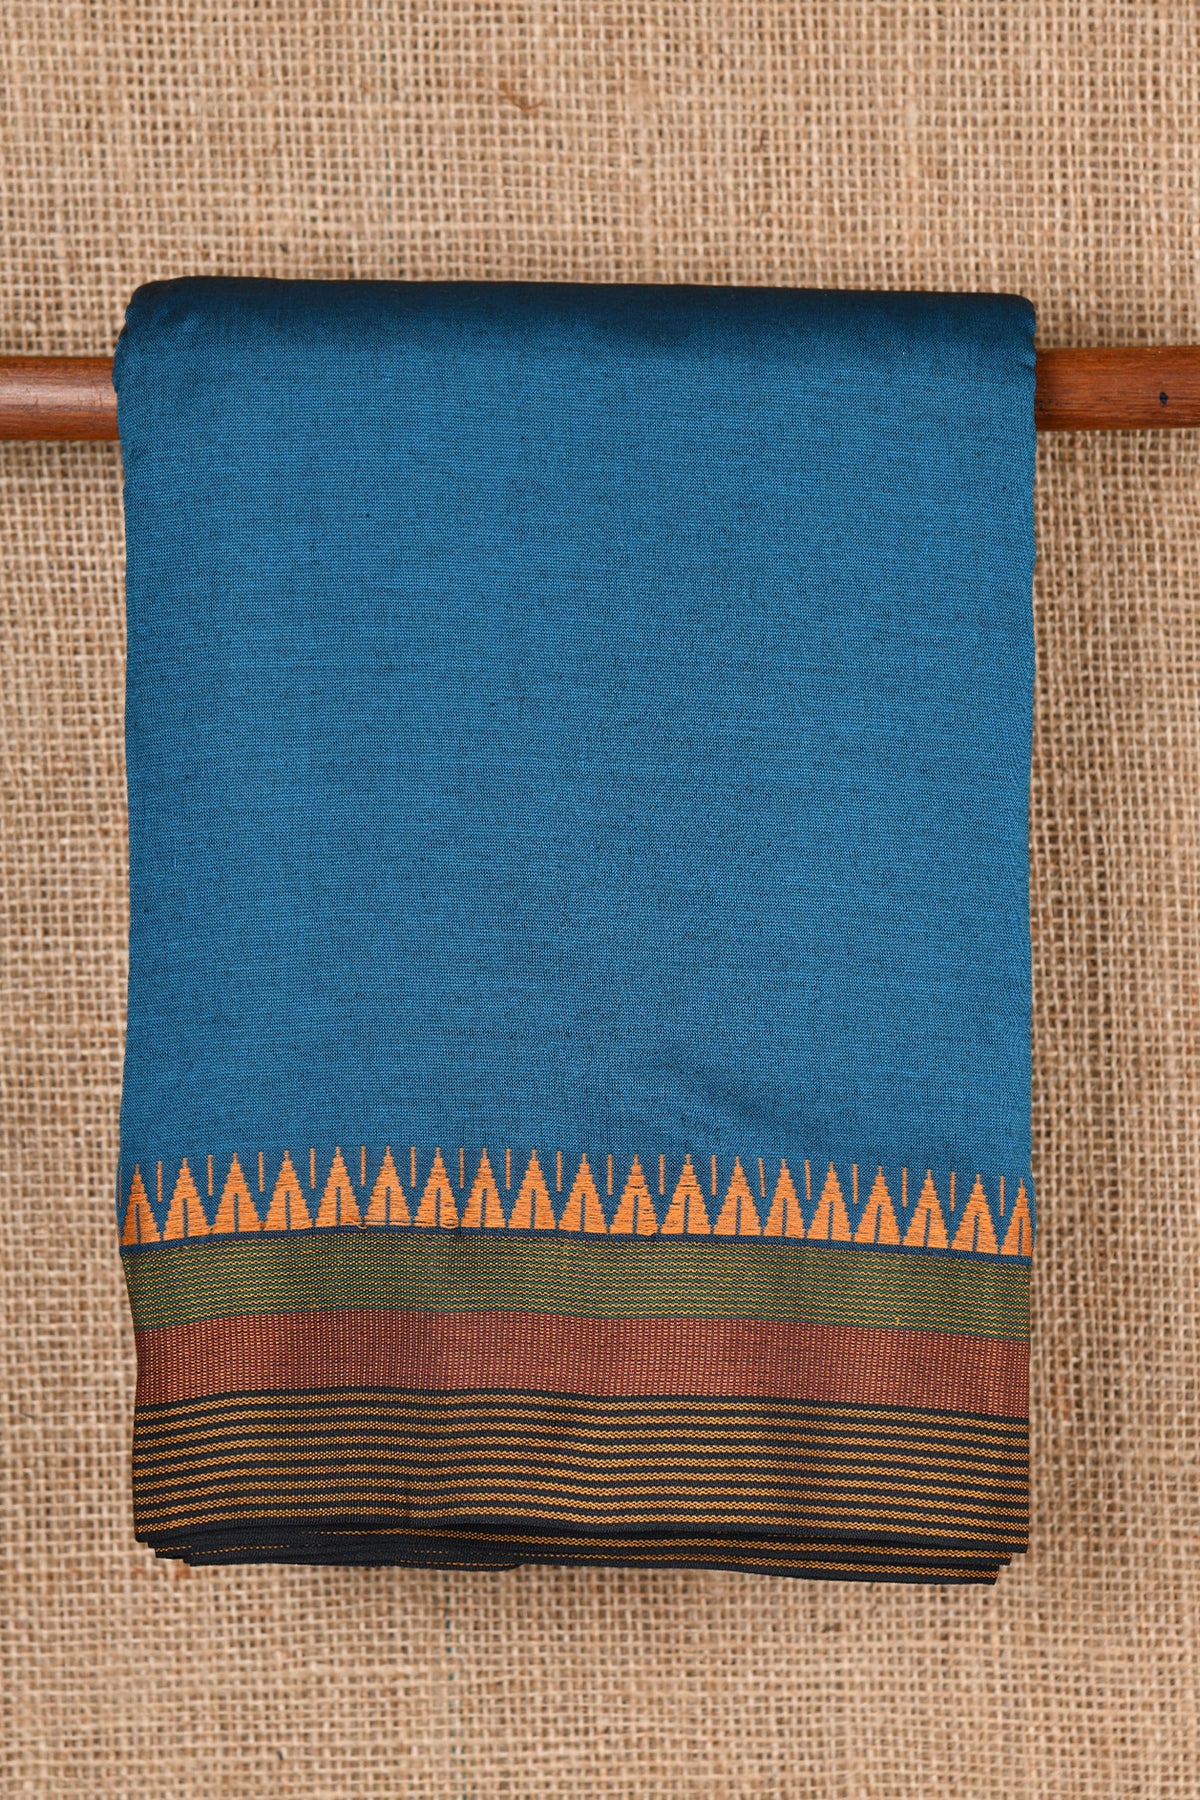 Stripe Design Temple Border Teal Blue Dharwad Cotton Saree